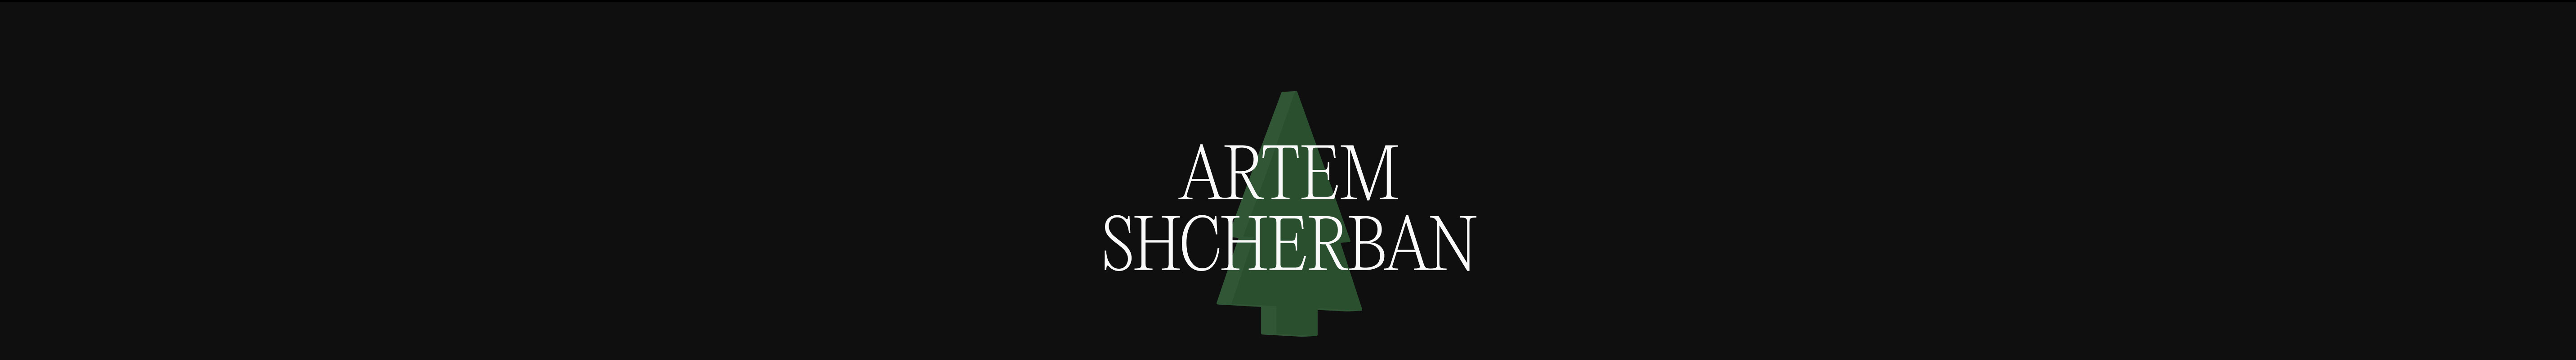 Artem Shcherban's profile banner